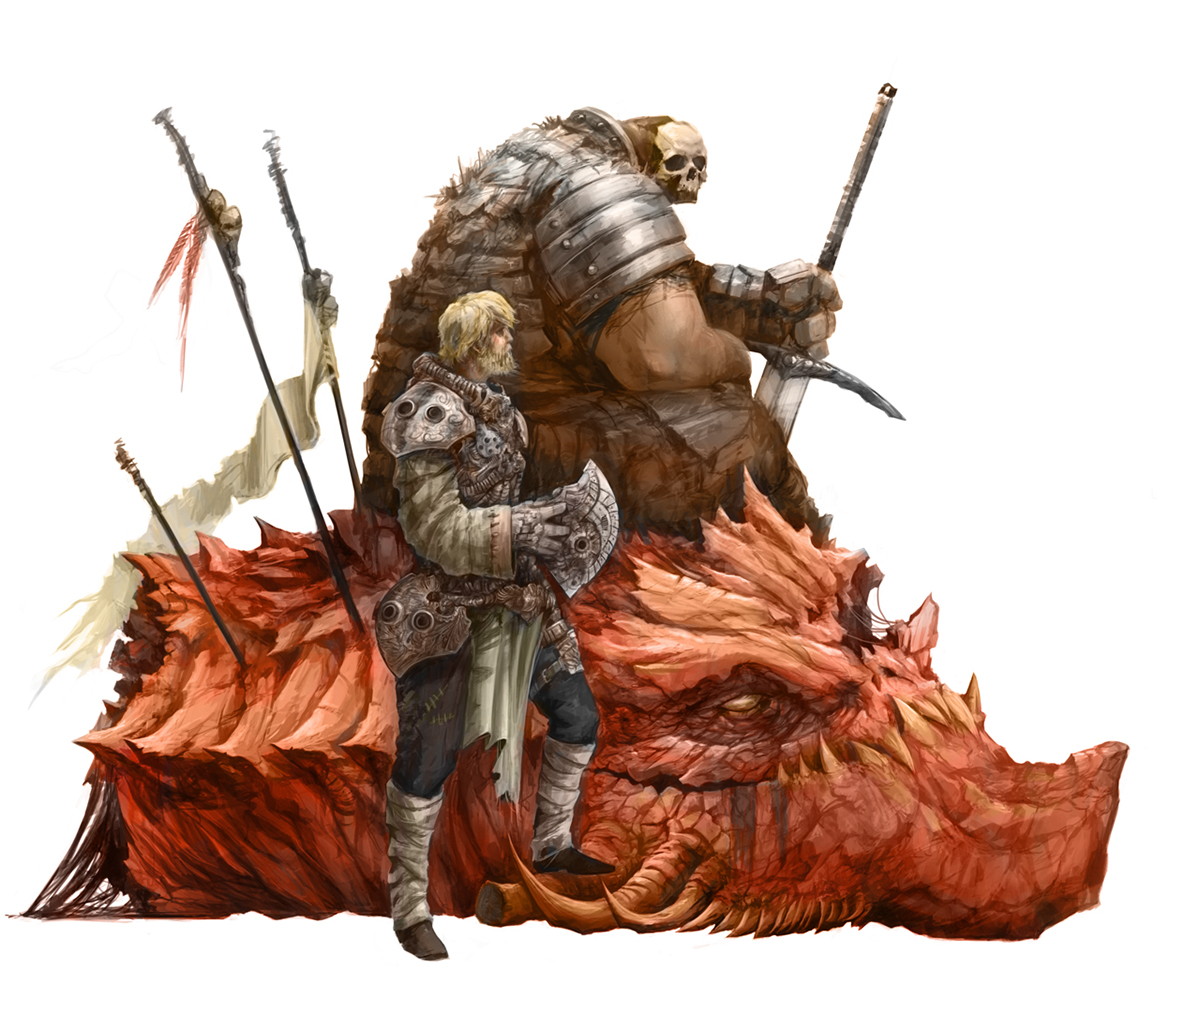 Hunters badass hell knight concept art Sword skull dragon fantasy heroic epic buddies eyardt artwork